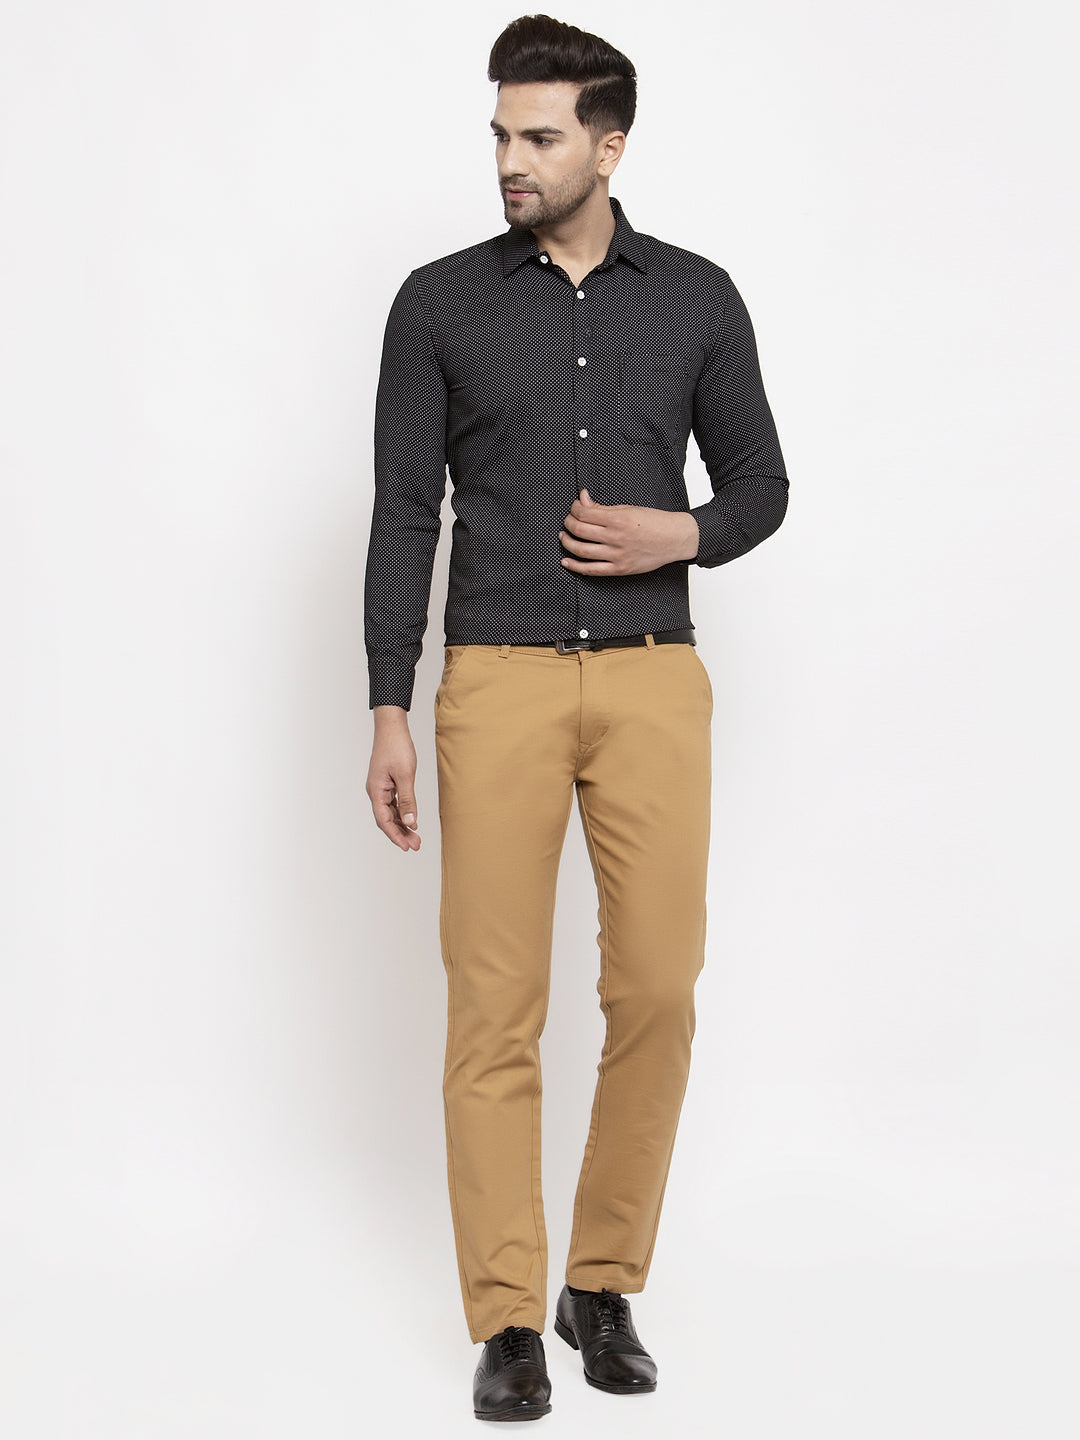 Men's Black Cotton Polka Dots Formal Shirts ( SF 736Black ) - Jainish